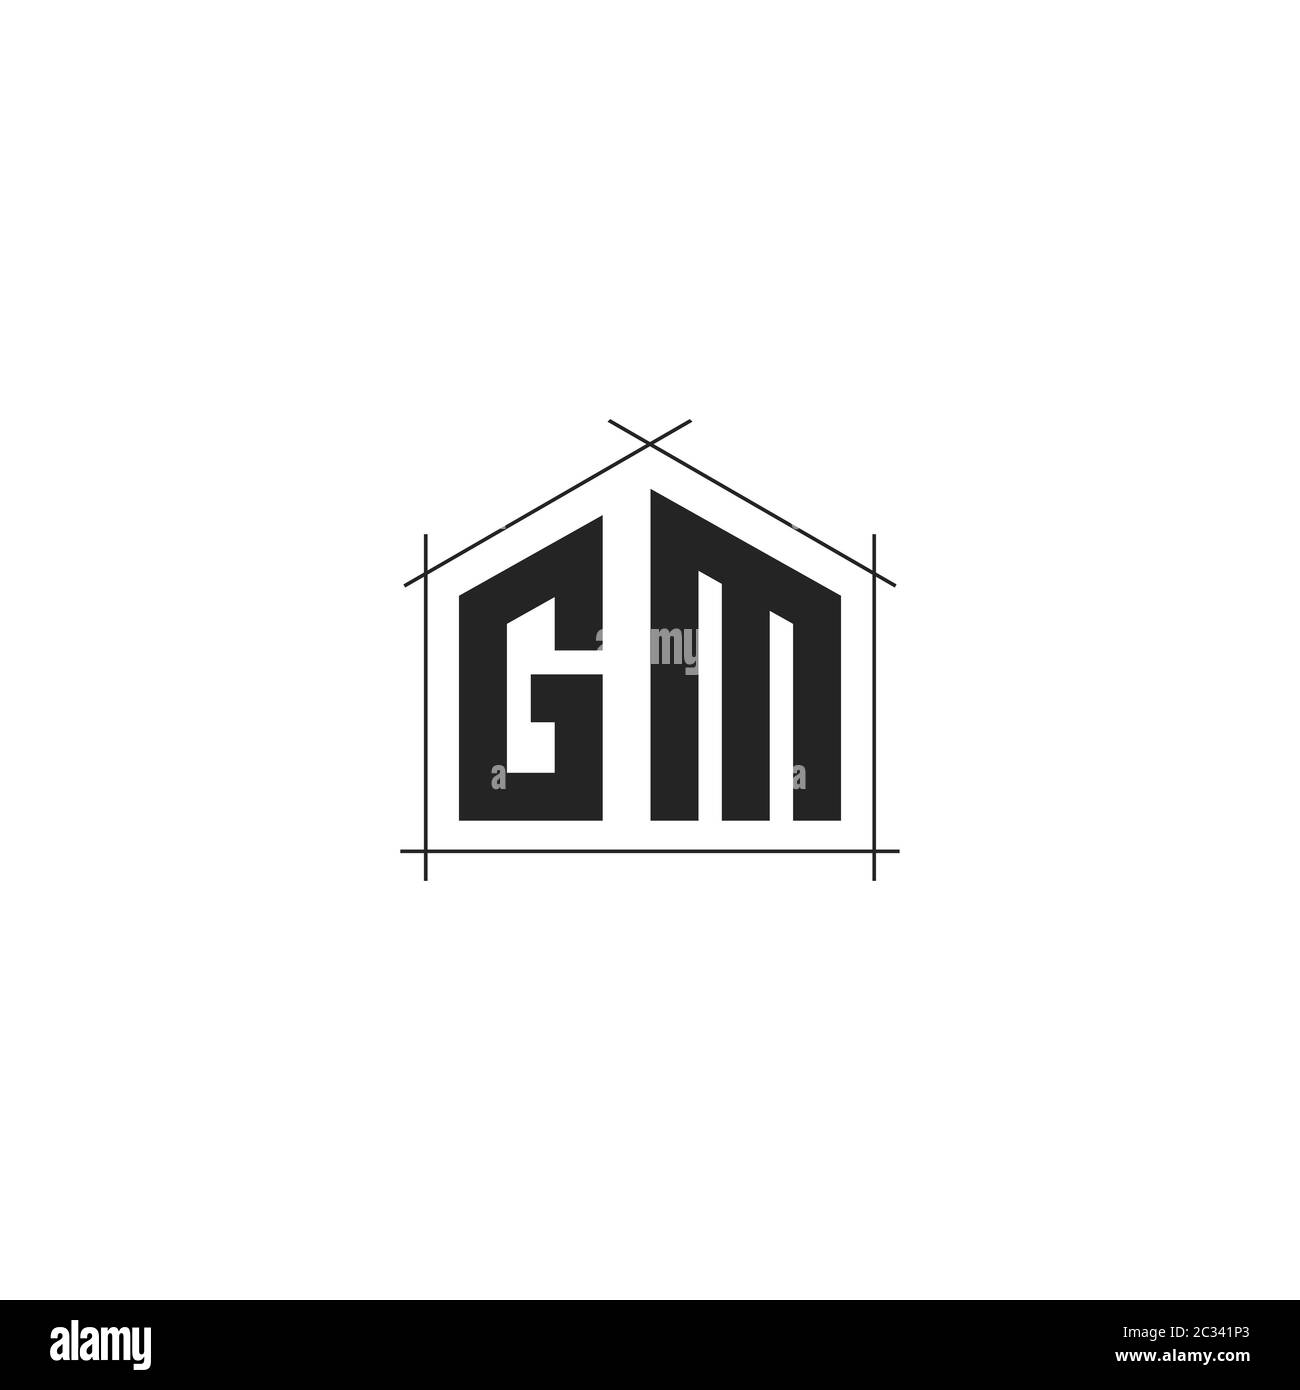 Initial GM Letter Linked Logo. GM letter Type Logo Design vector Template.  Abstract Letter GM logo Design Stock Vector Image & Art - Alamy